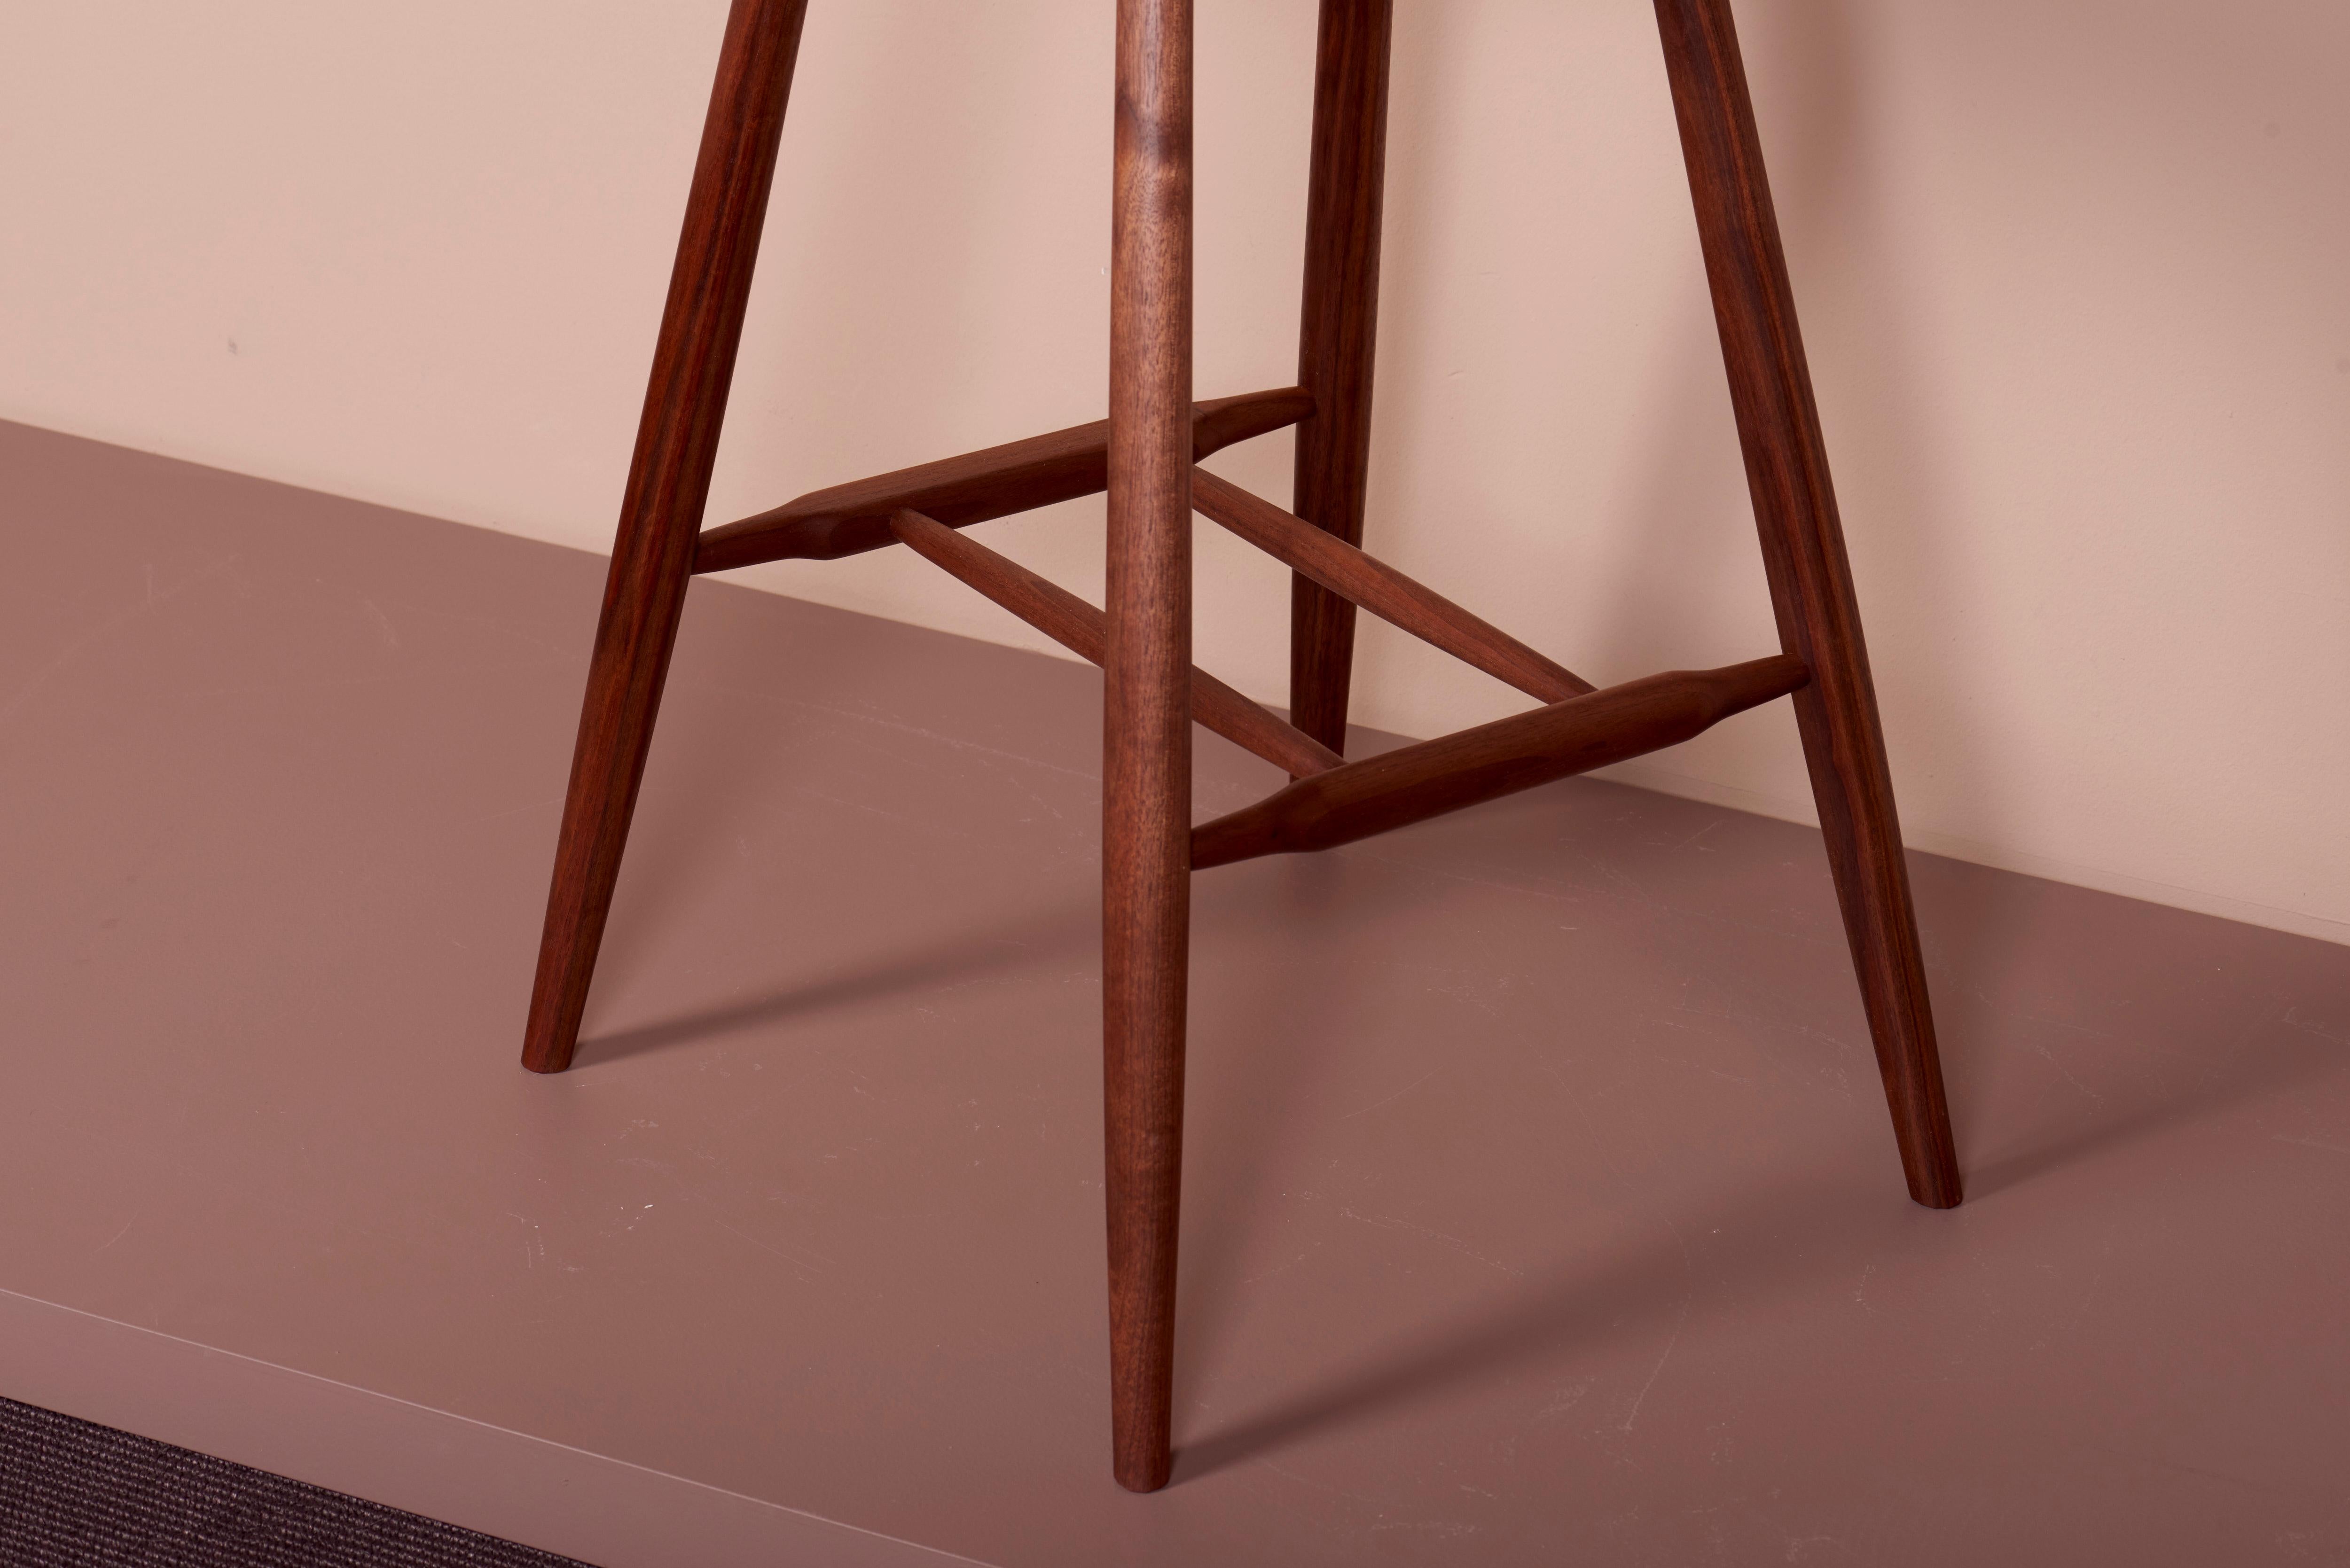 Four Mira Nakashima 4-Legged High Chairs based on a design by George Nakashima For Sale 2